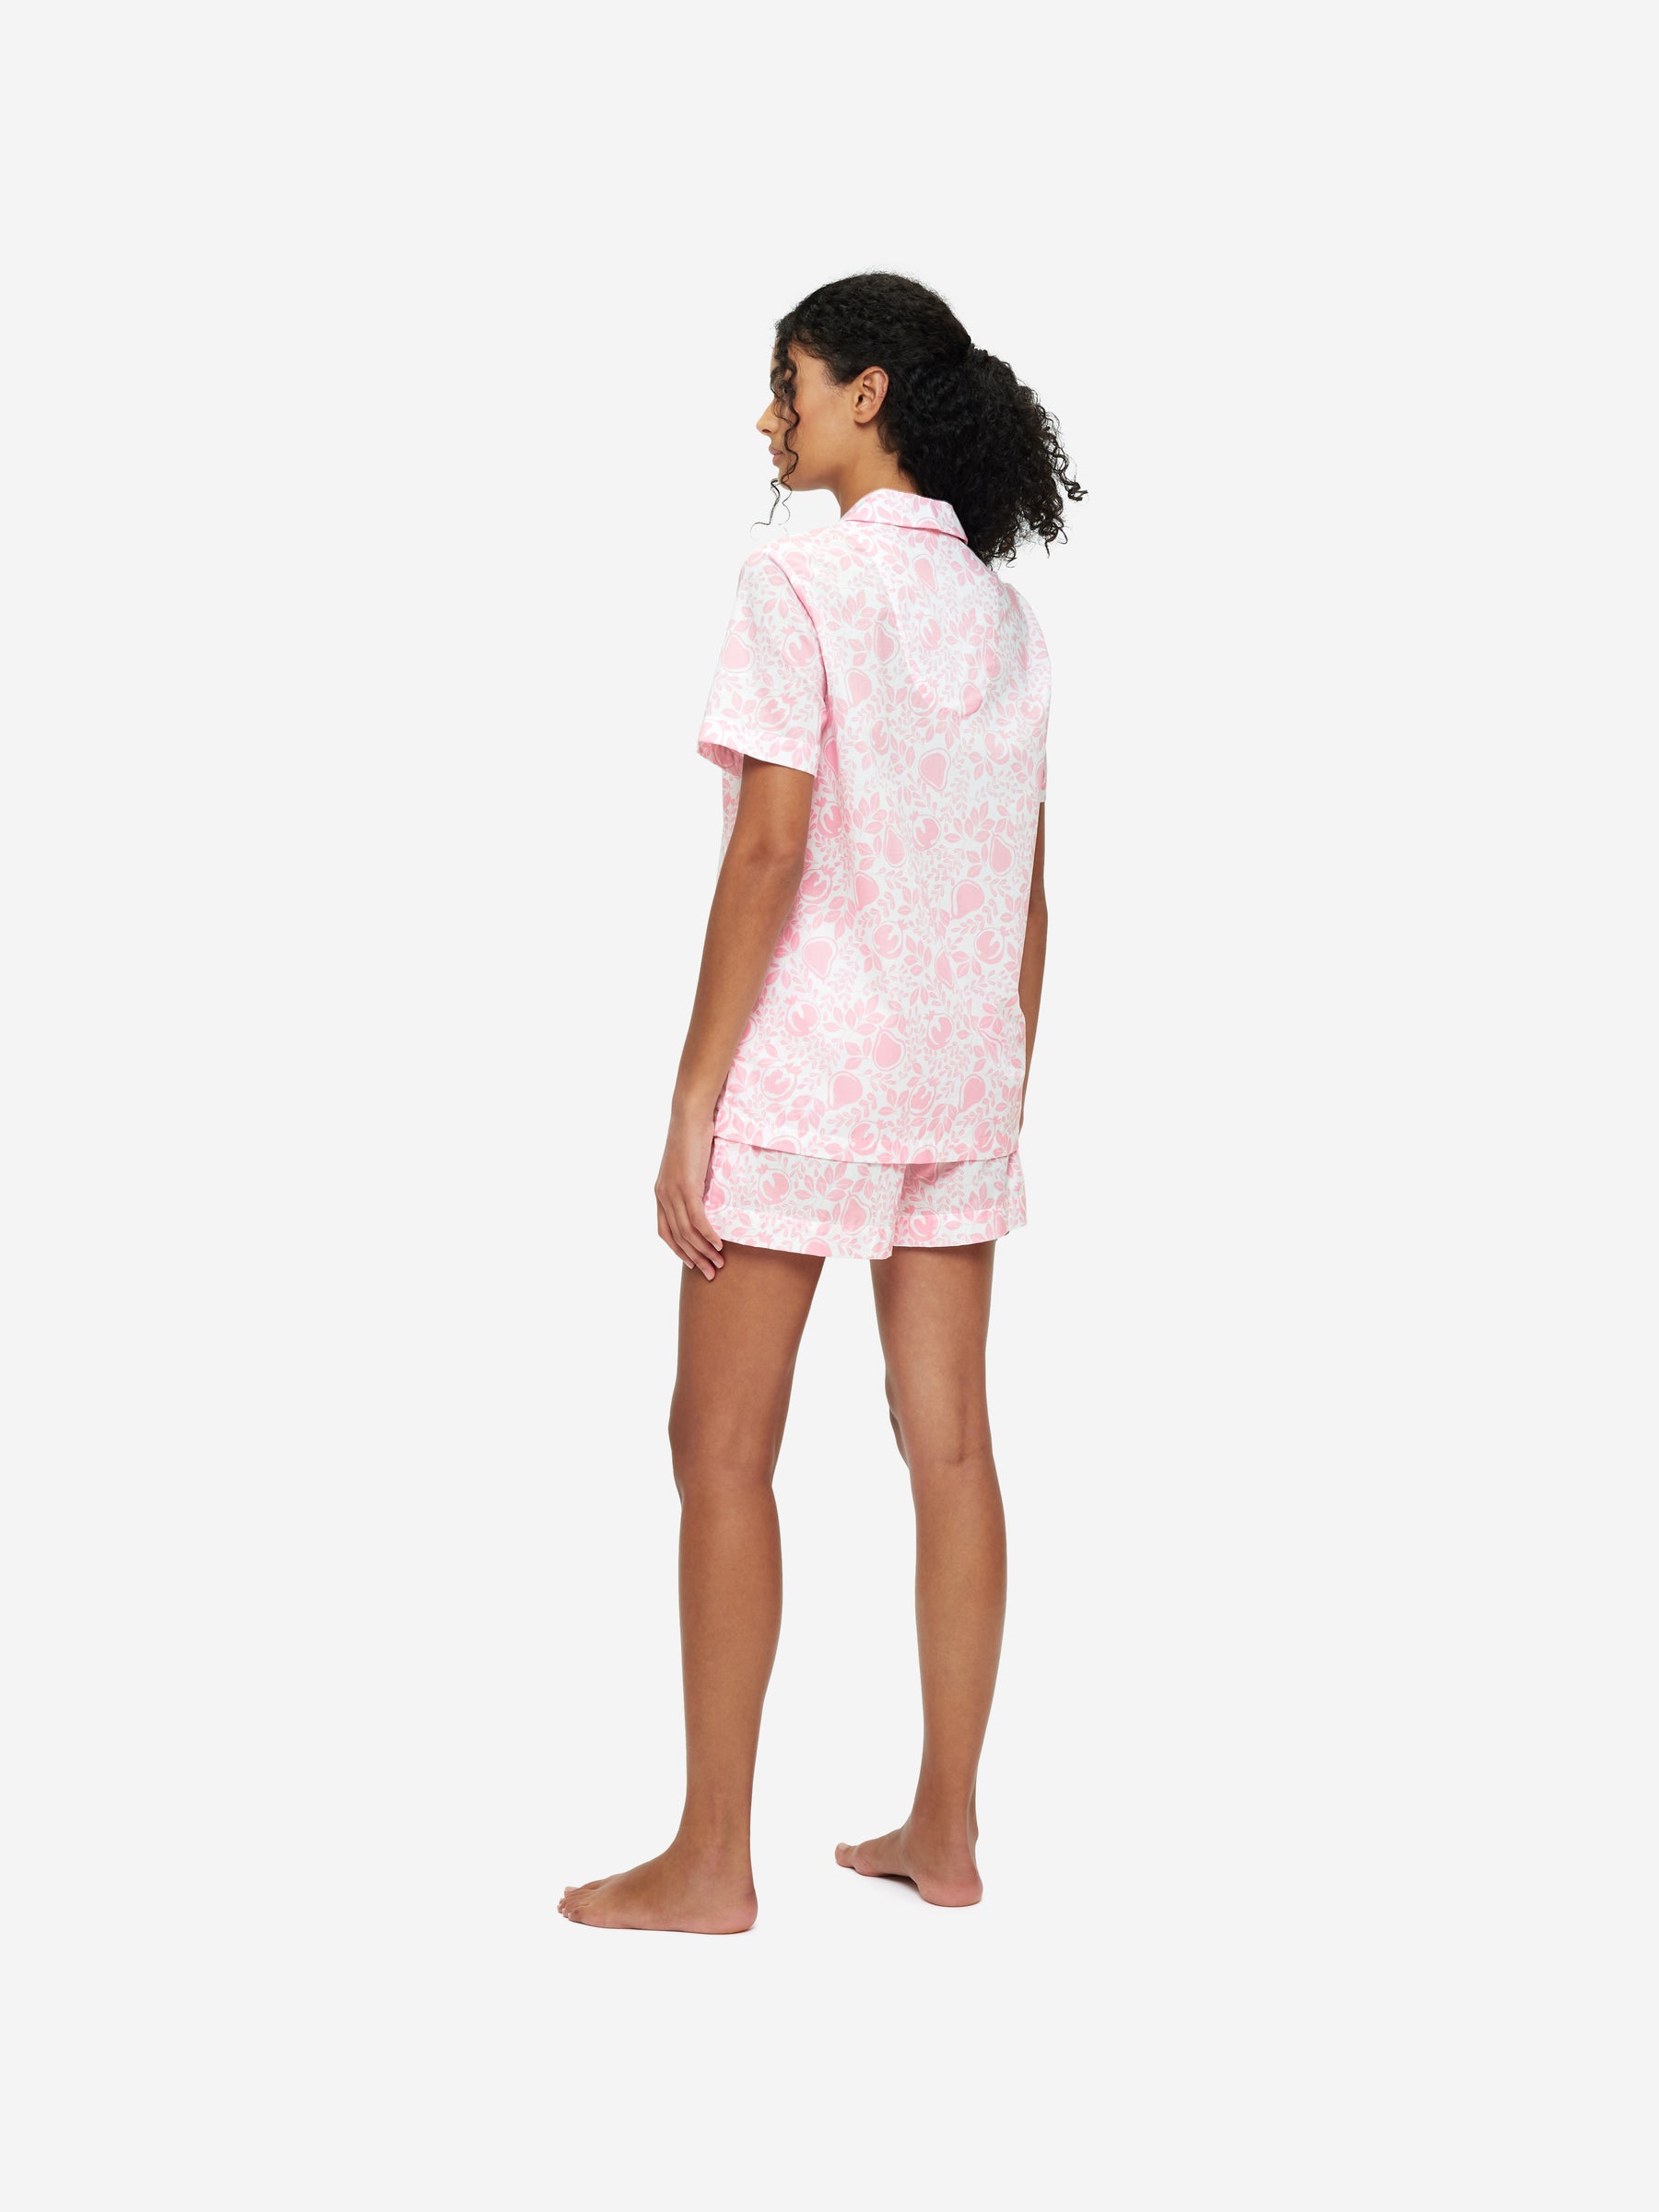 Women's Short Pyjamas Nelson 89 Cotton Batiste Pink